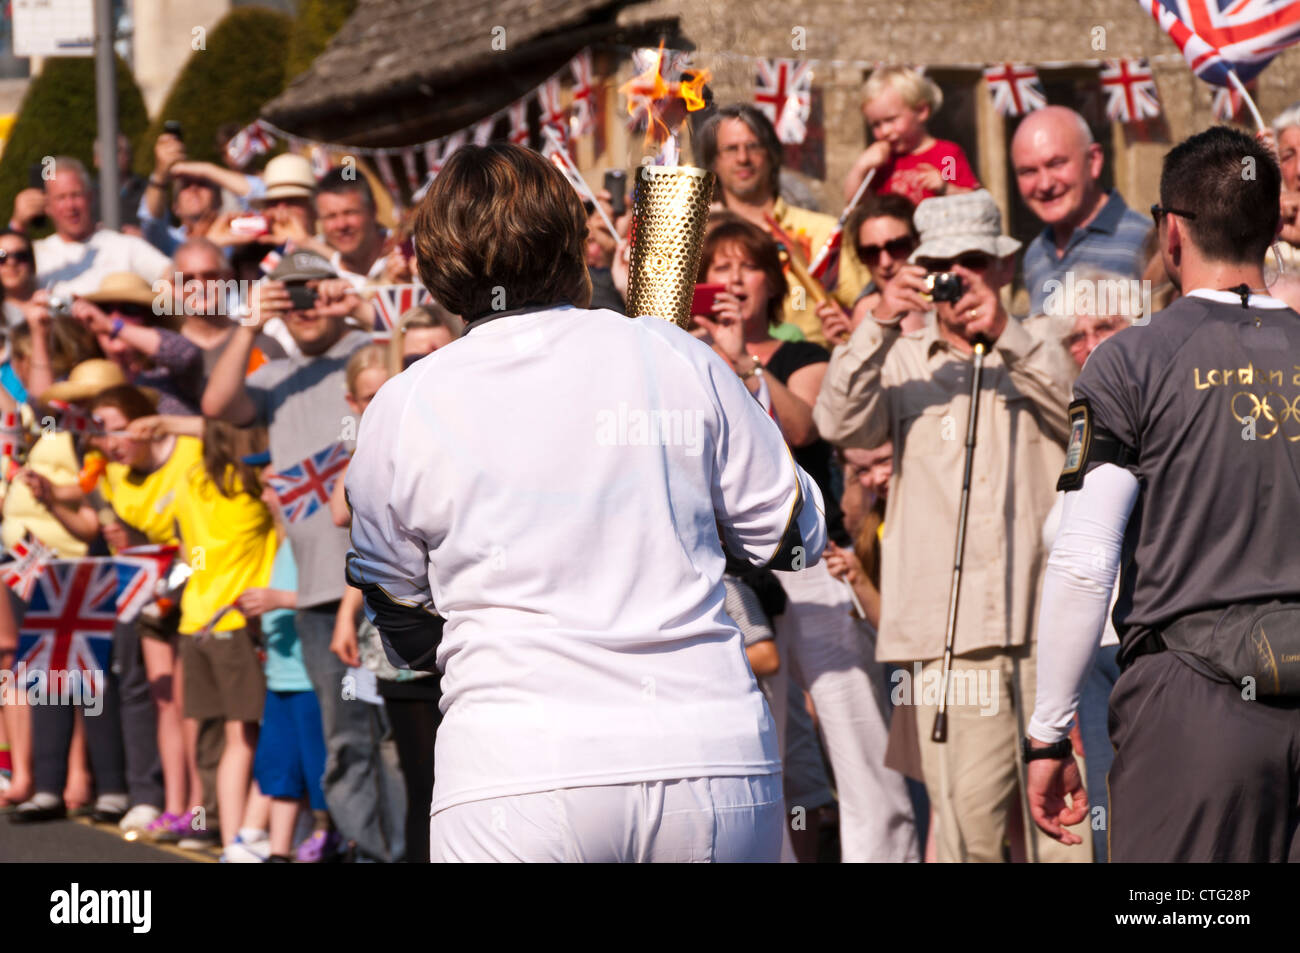 Folla che acclamava Torcia Olimpica bearer, Painswick, Gloucestershire, UK. (23 maggio 2012) Foto Stock